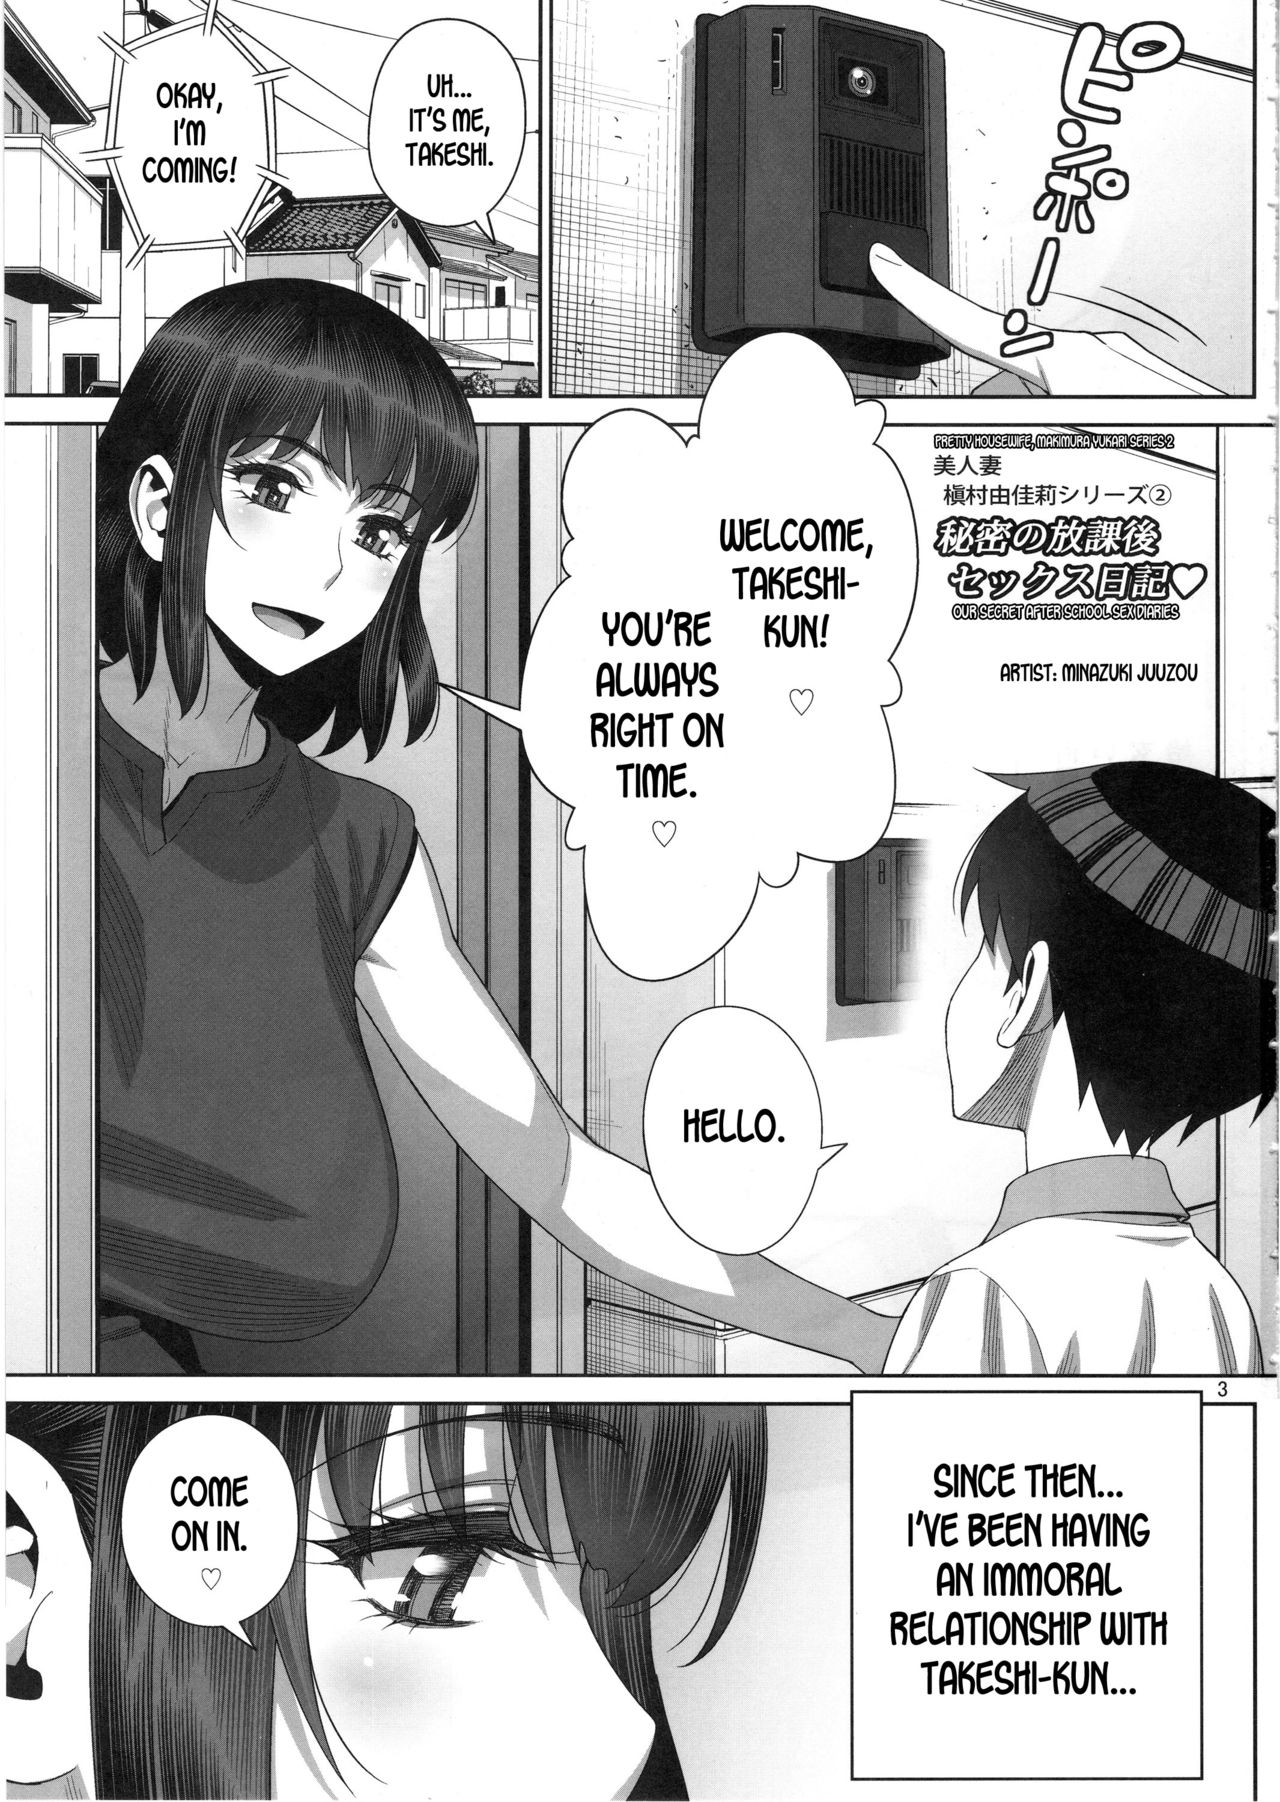 1280px x 1802px - Secret After School Sex Diary [Minazuki Juuzou] - Chapter 1 - Free Hentai  Manga, Adult Webtoon, Doujinshi Manga and Mature Comics